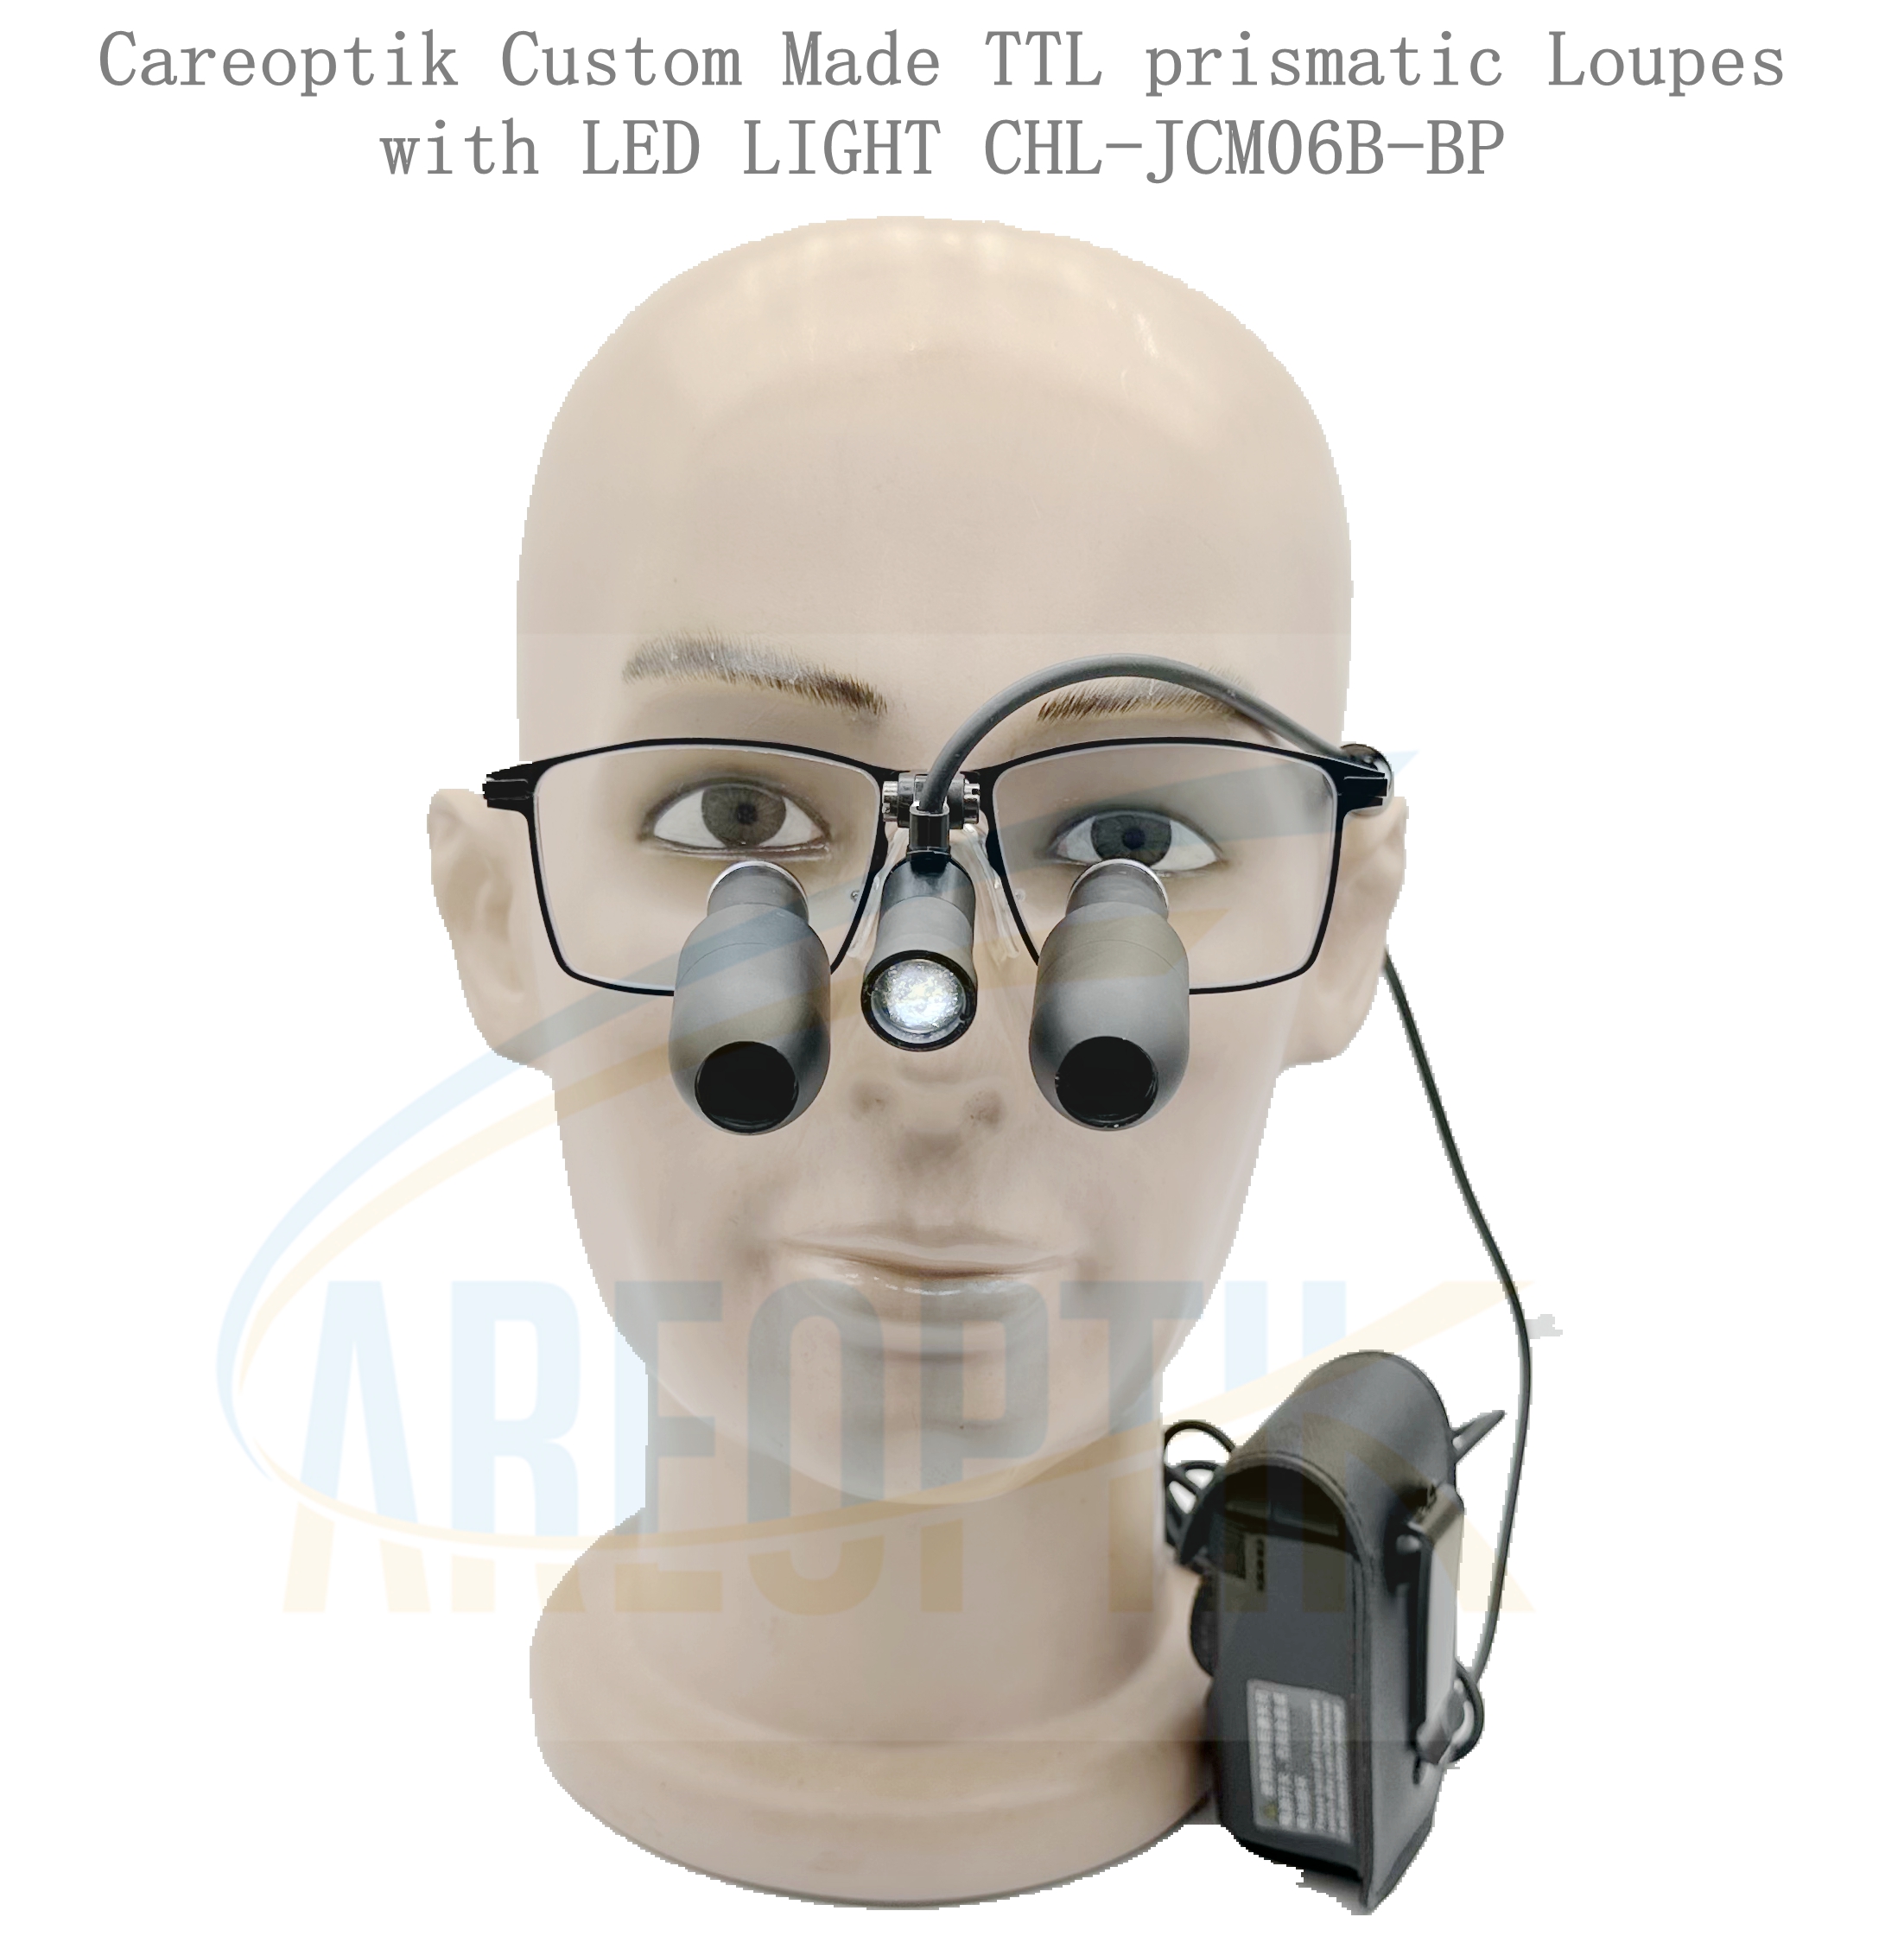 careoptik TTL prismatic loupes with light